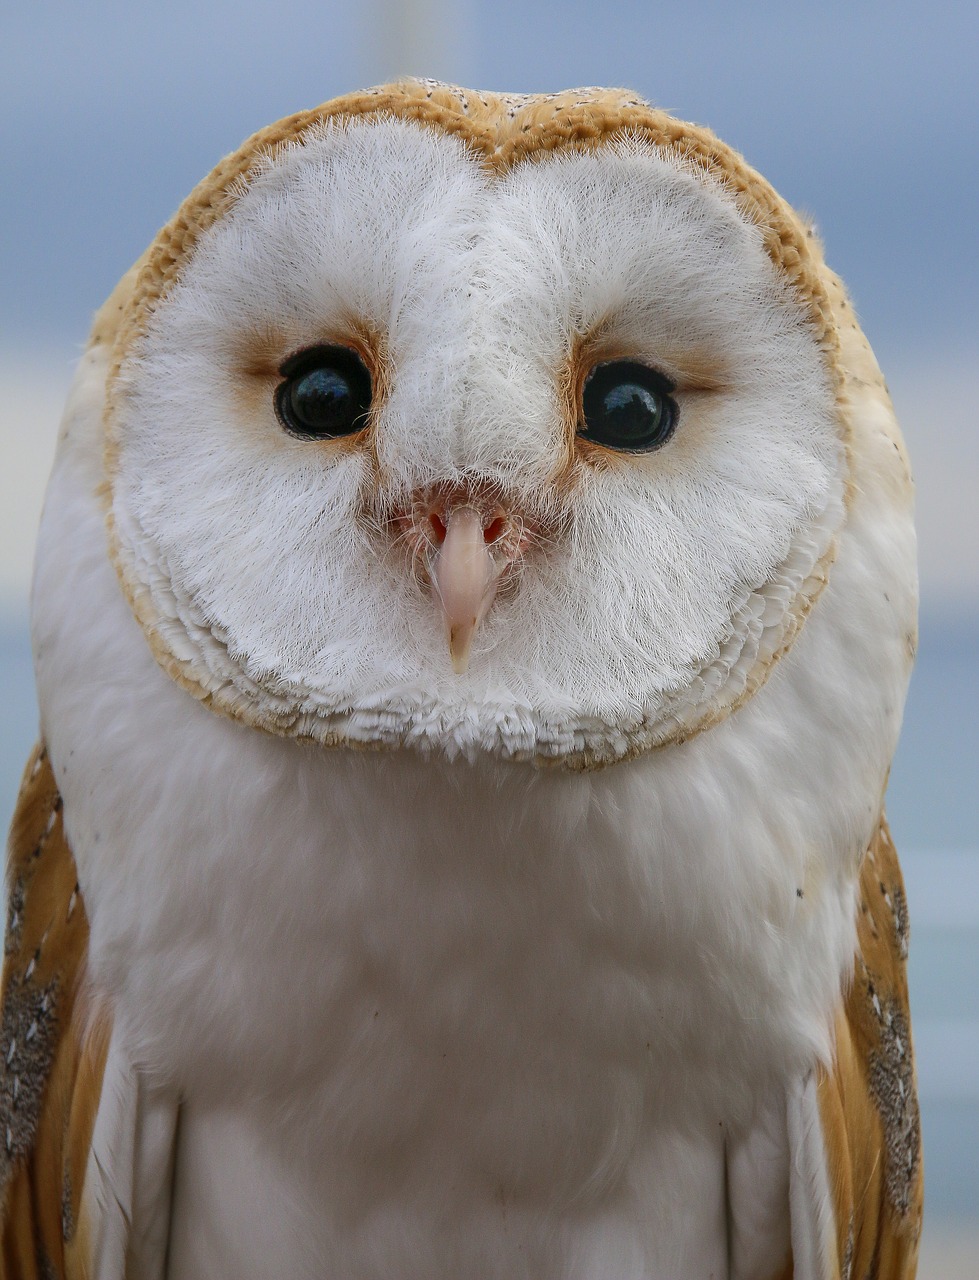 ave bird of prey owl free photo